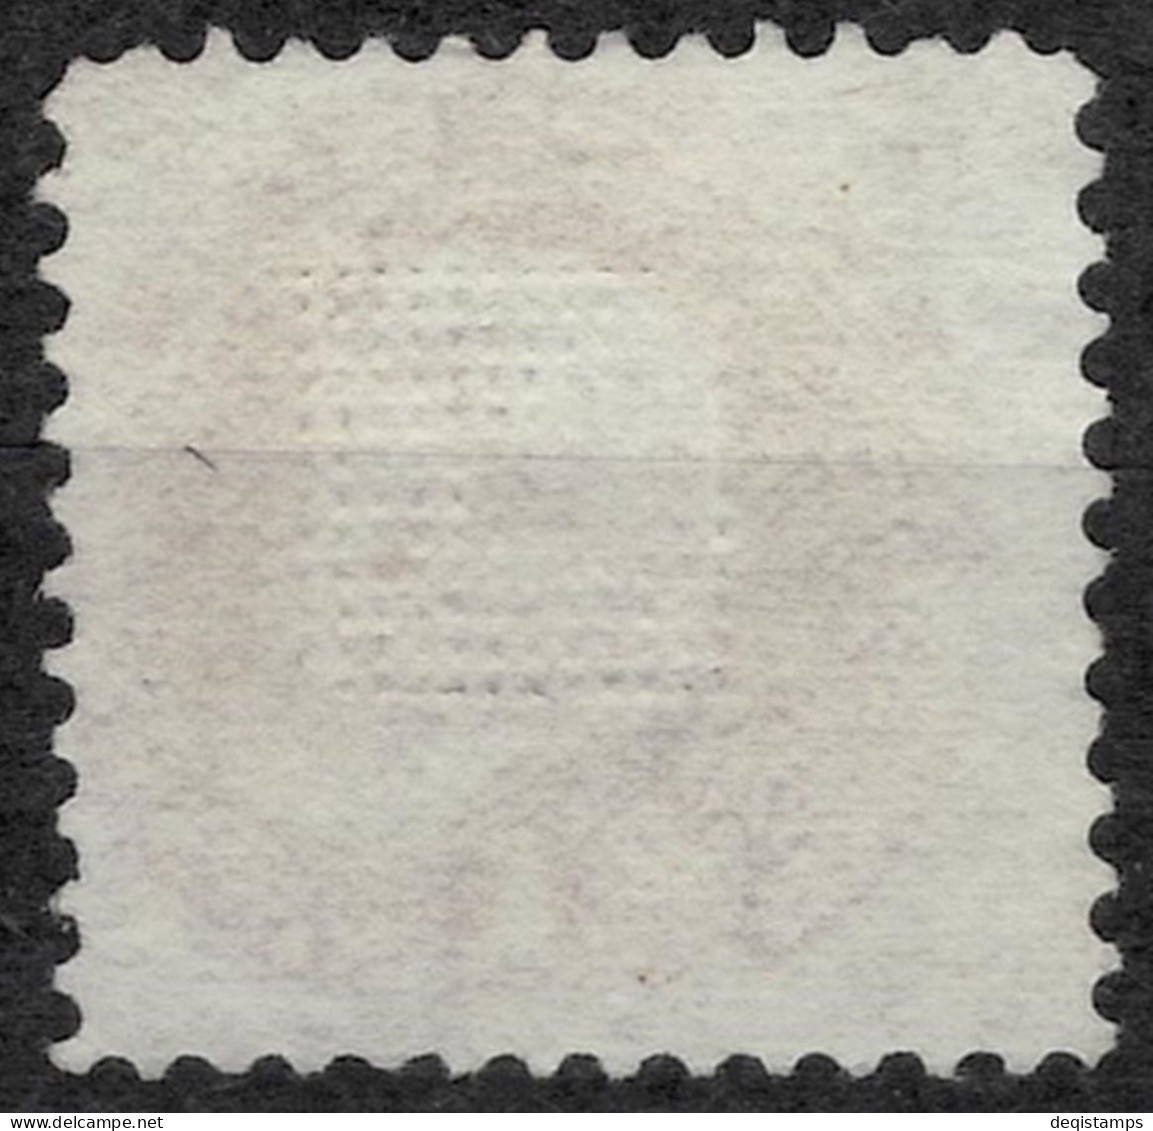 USA 1890/93 1c  Benjamin Franklin - Grill About 9½ X 9mm  MNG Stamp - Ungebraucht